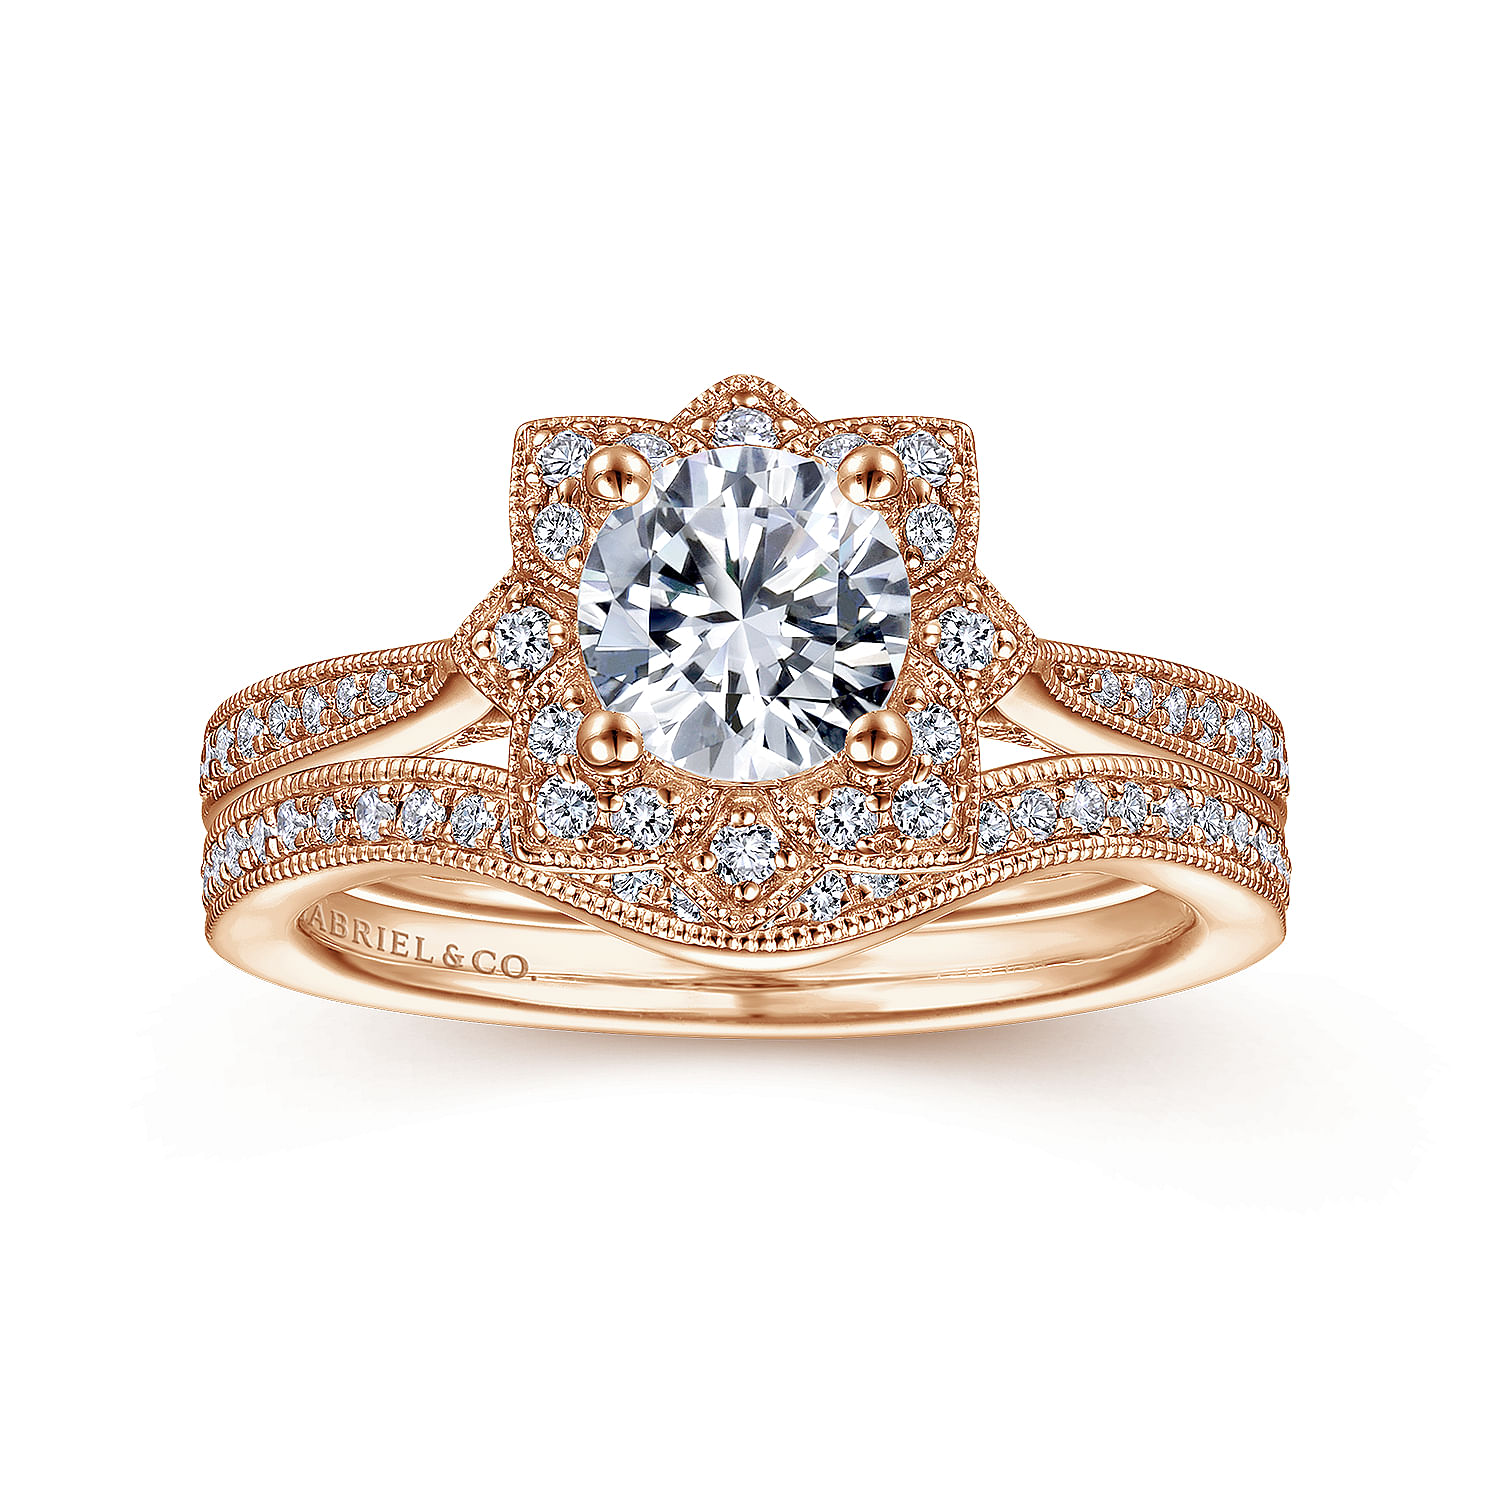 Unique 14K Rose Gold Vintage Inspired Halo Diamond Engagement Ring